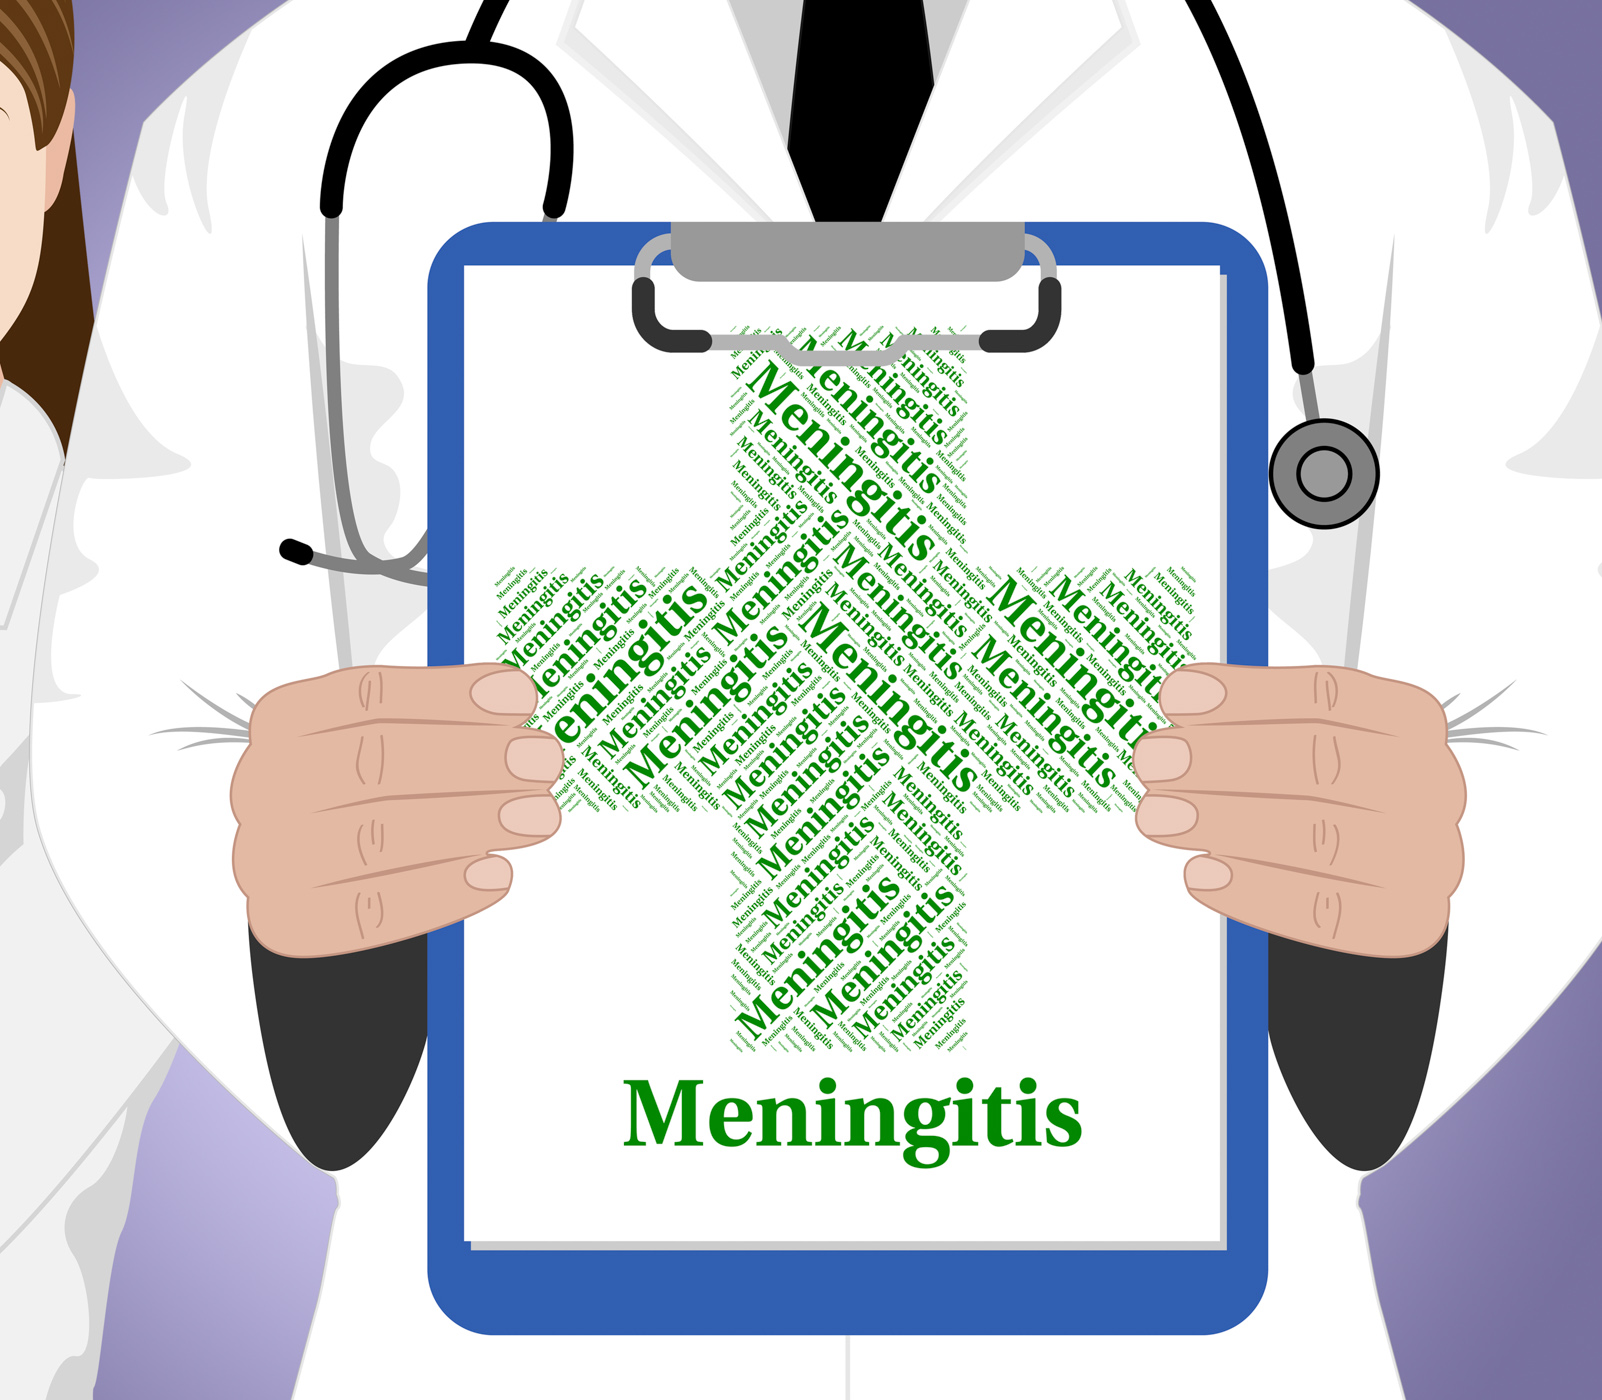 Meningitis word represents poor health and affliction photo